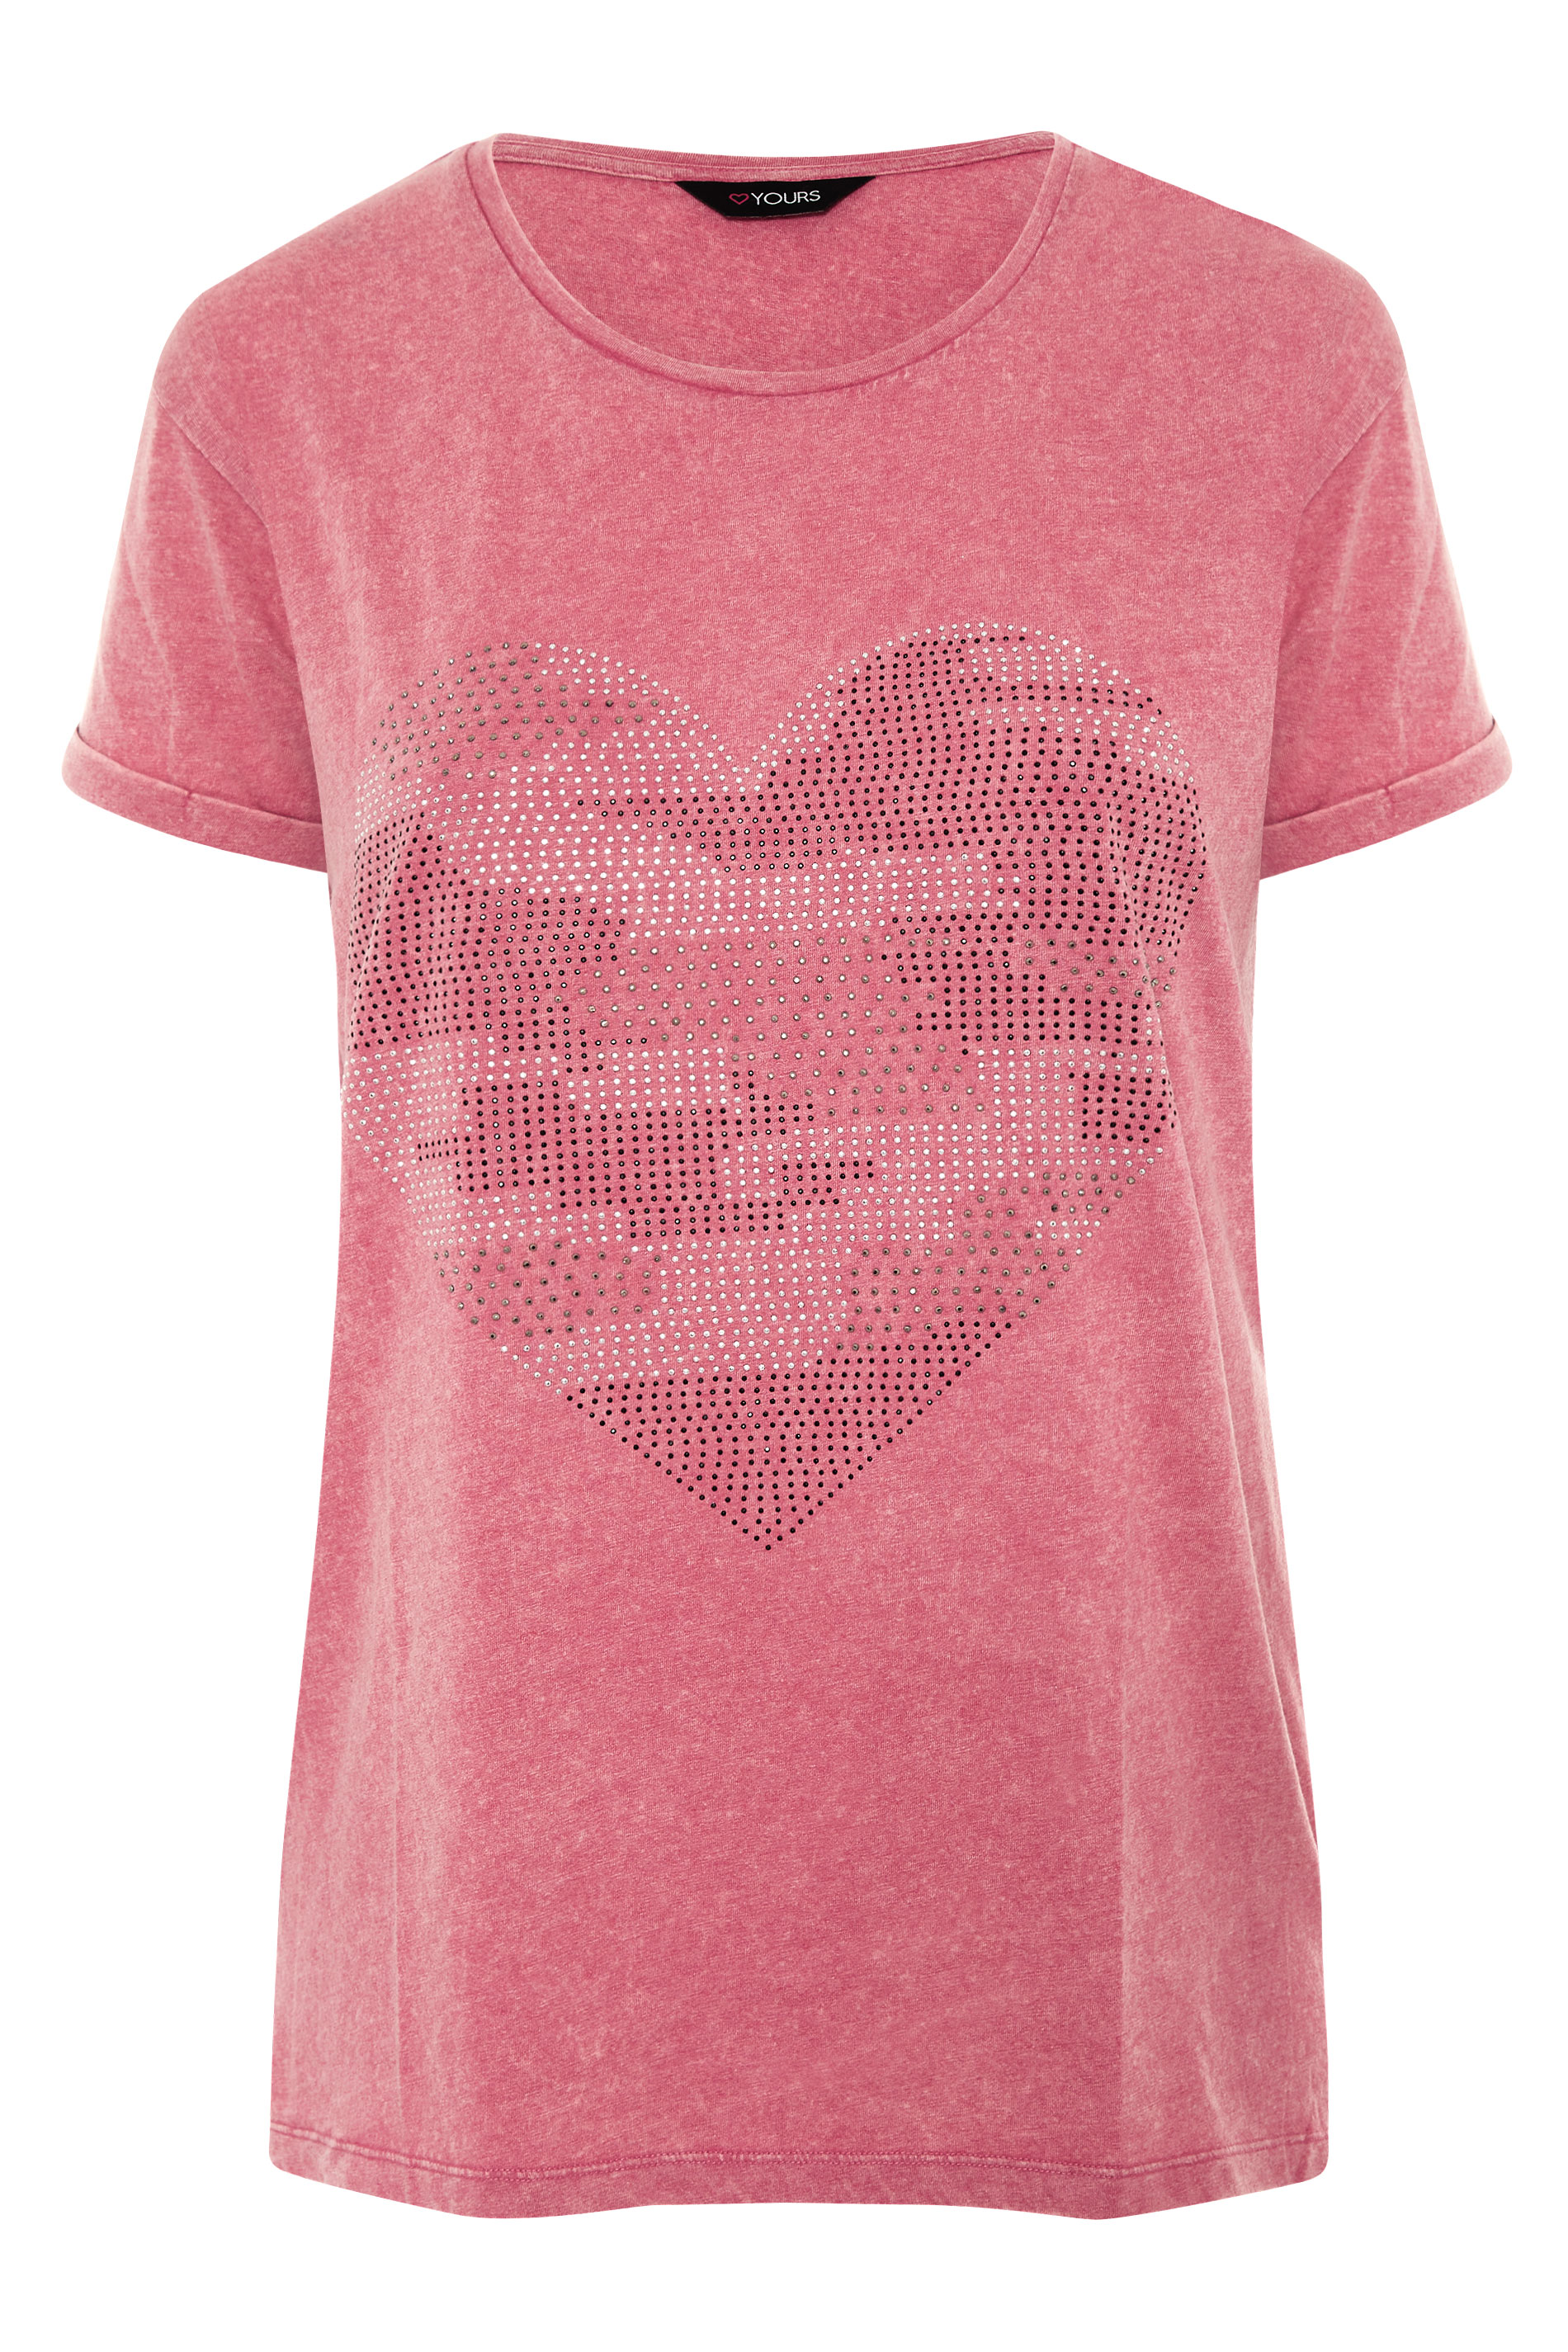 Grande taille  Tops Grande taille  T-Shirts | T-Shirt Rose Coeur Clouté Ourlet Plongeant - ZK10977